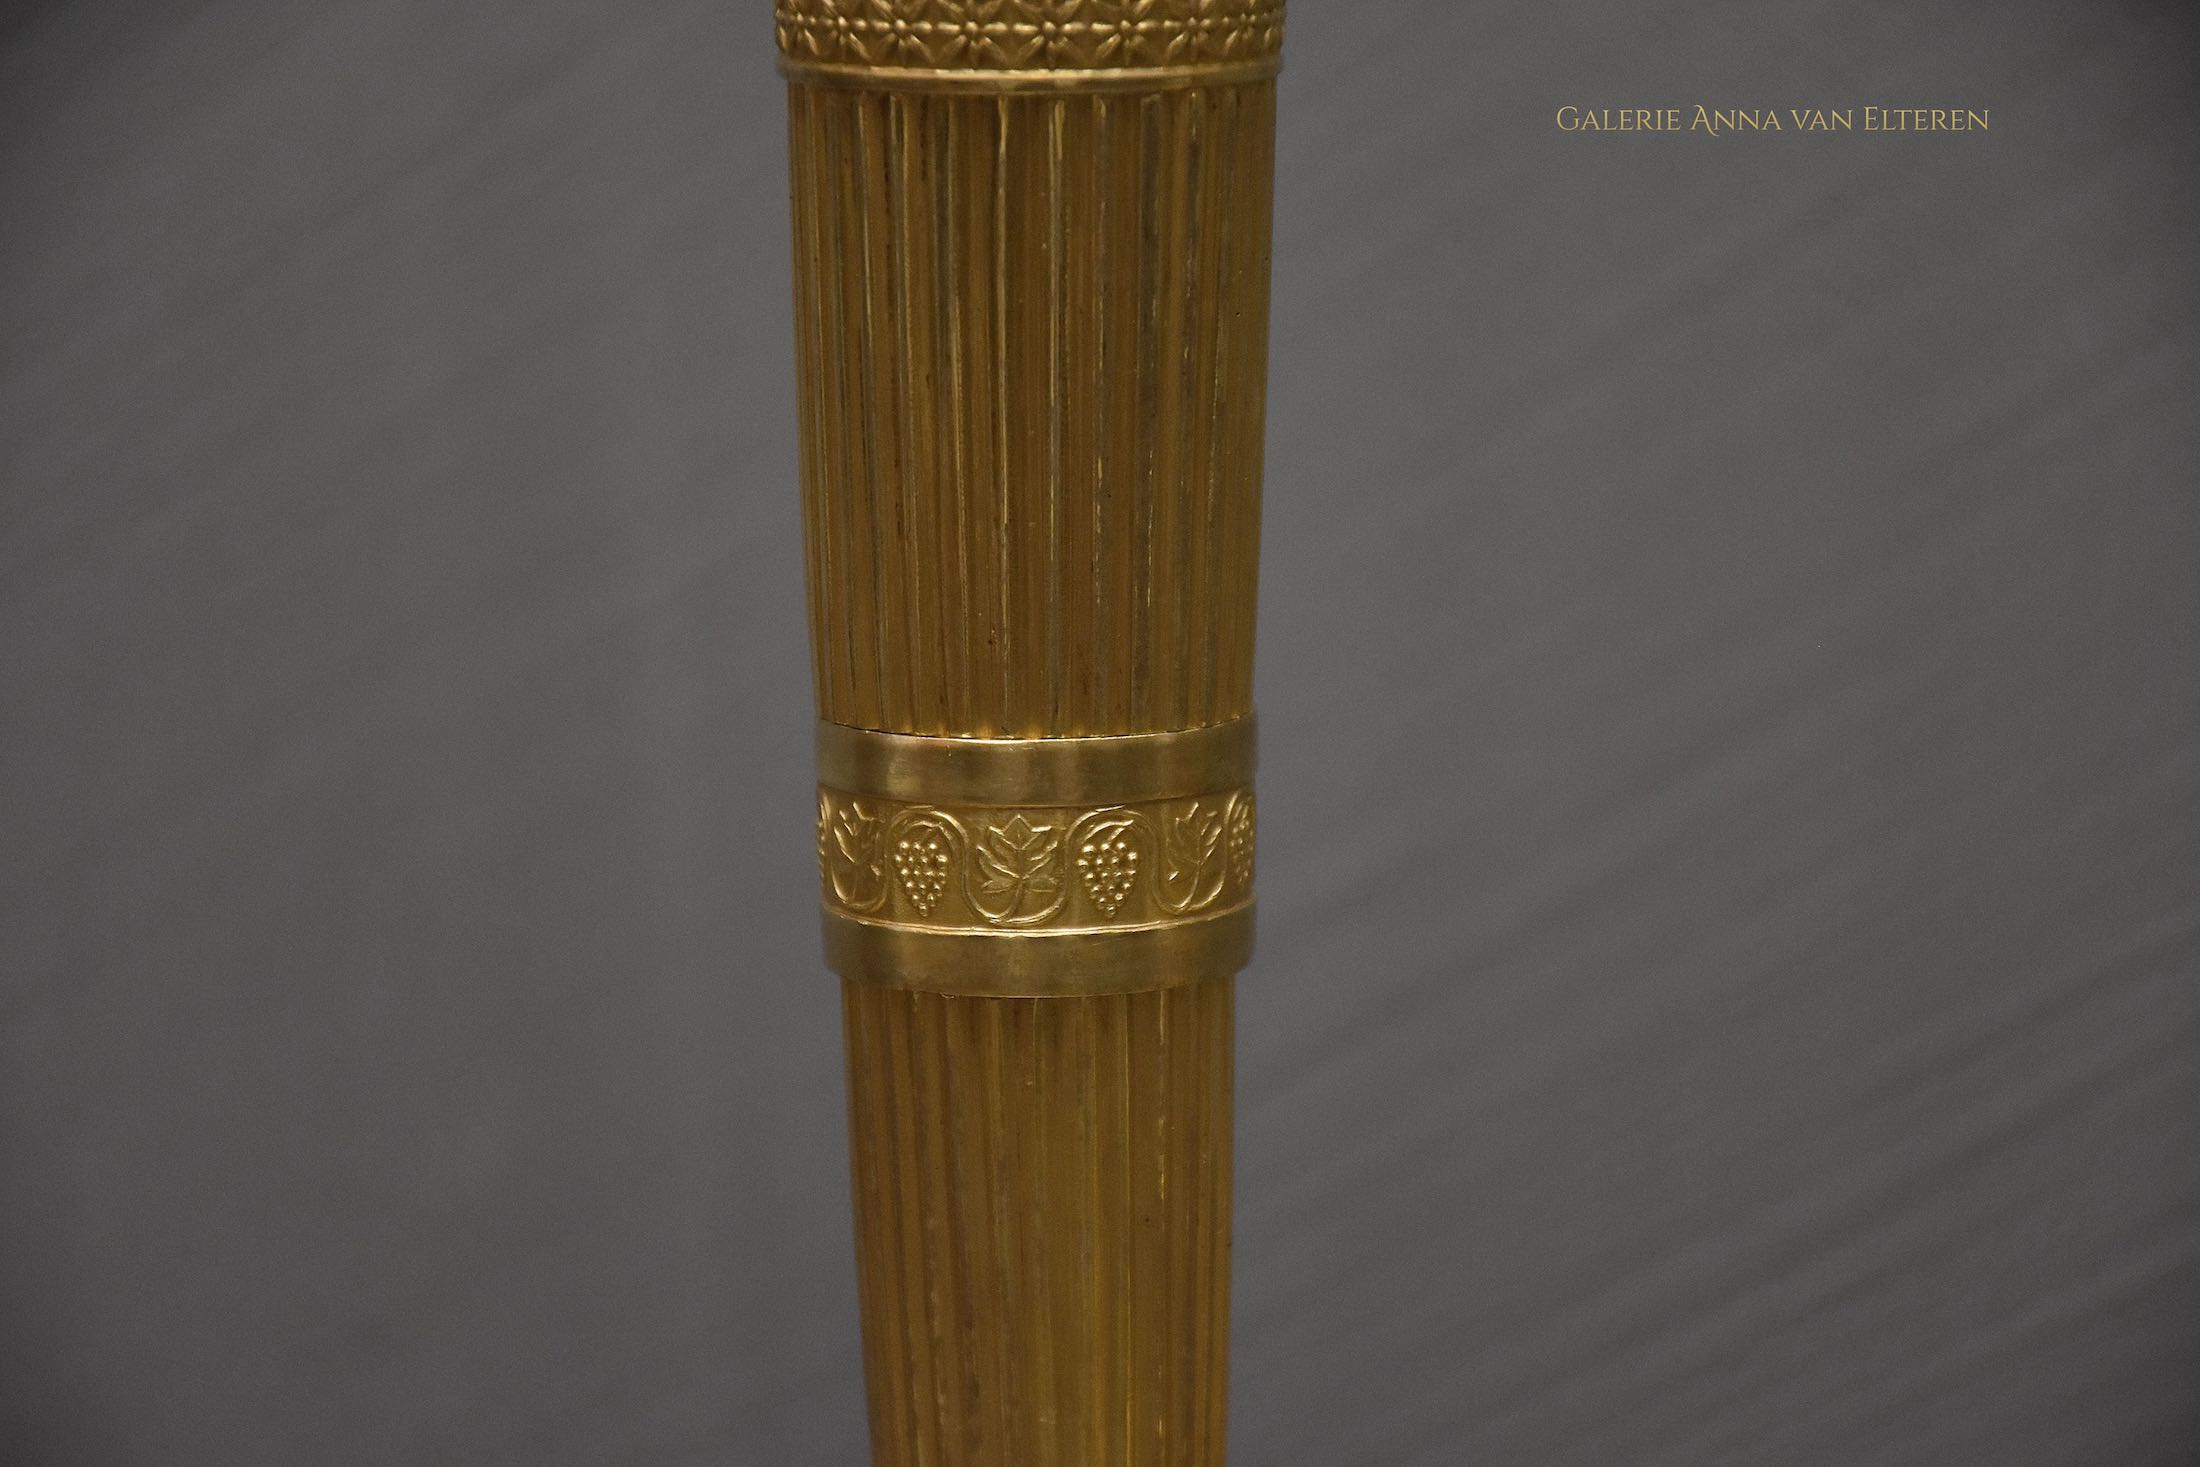 A pair of French Empire ormolu candlesticks